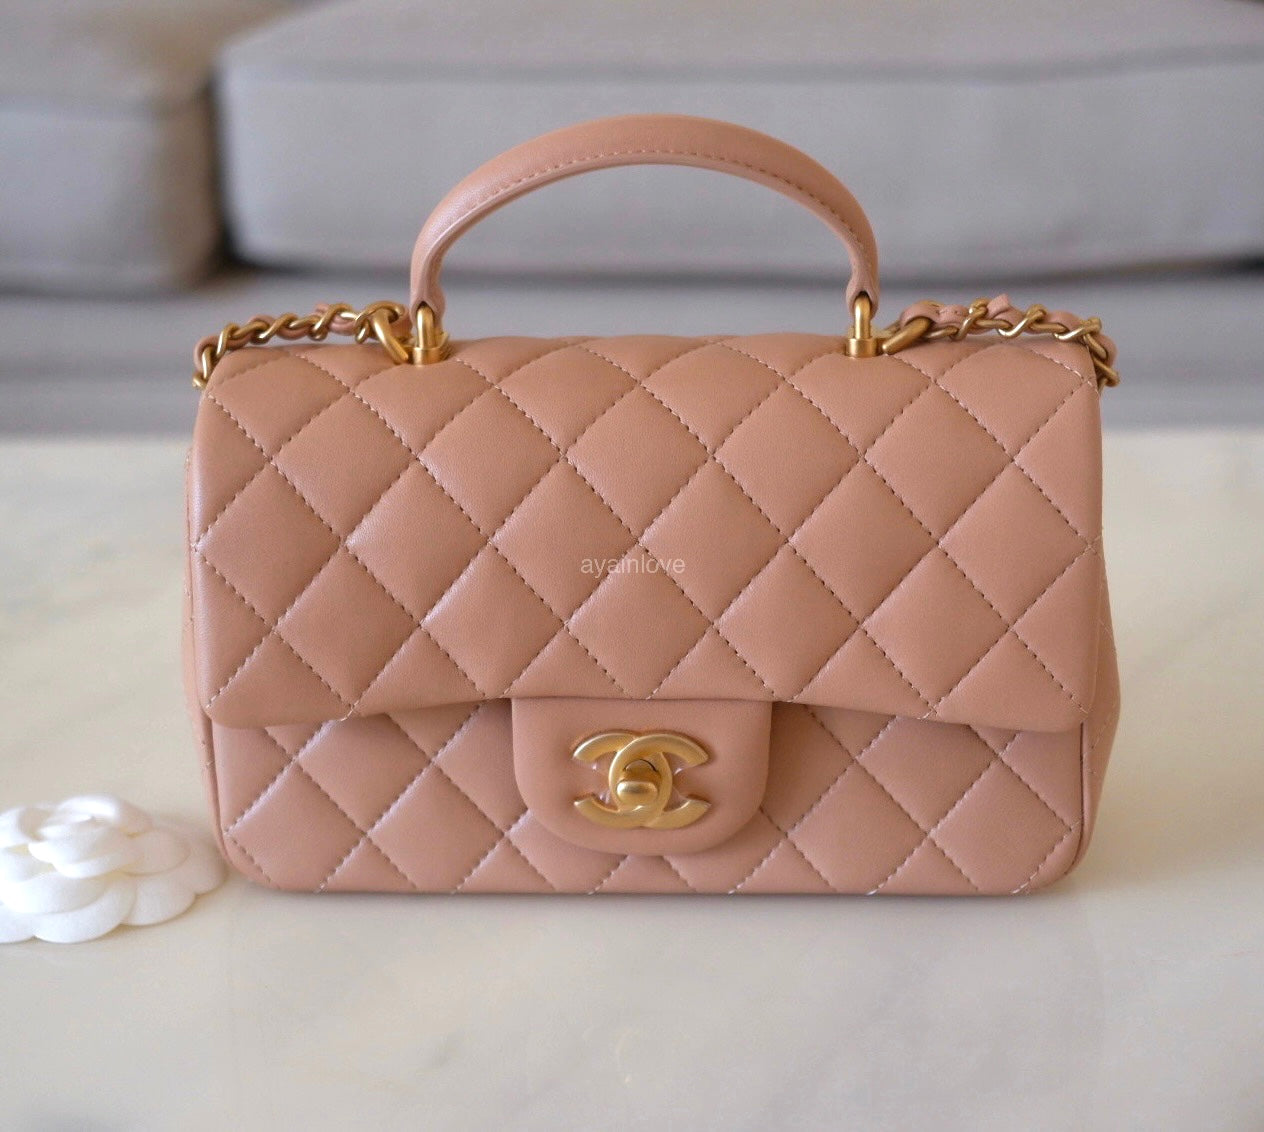 Chanel Top Handle Mini Rectangular Flap Bag Iridescent Green Lambskin –  Coco Approved Studio